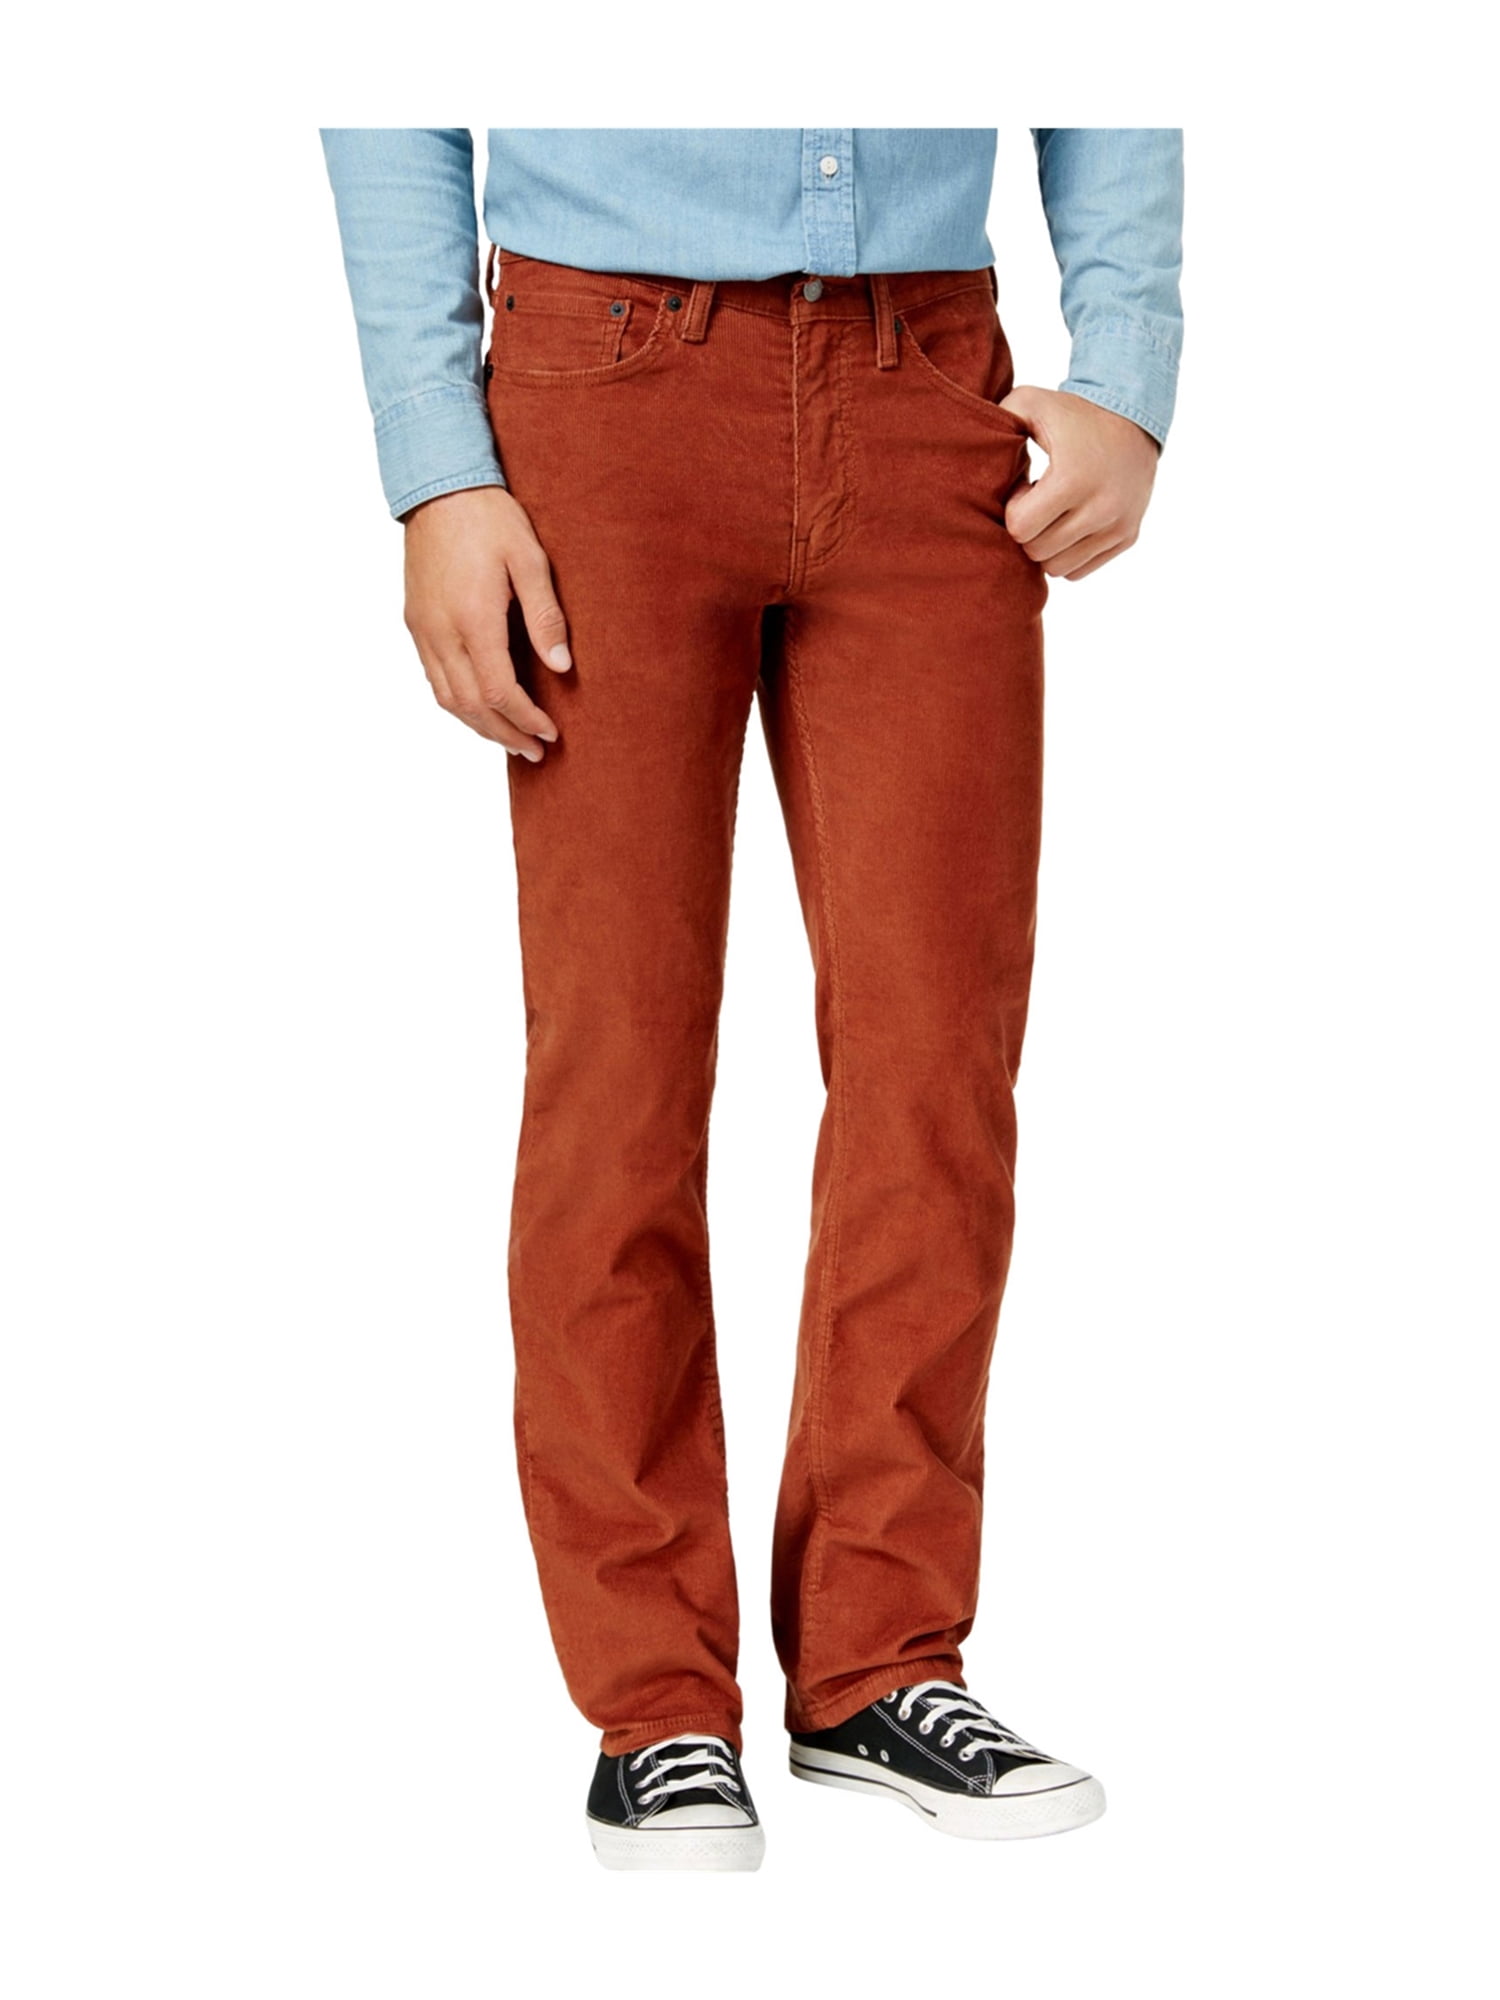 Levis Mens Bedford Casual Corduroy Pants richbrown 38x30 | Walmart Canada